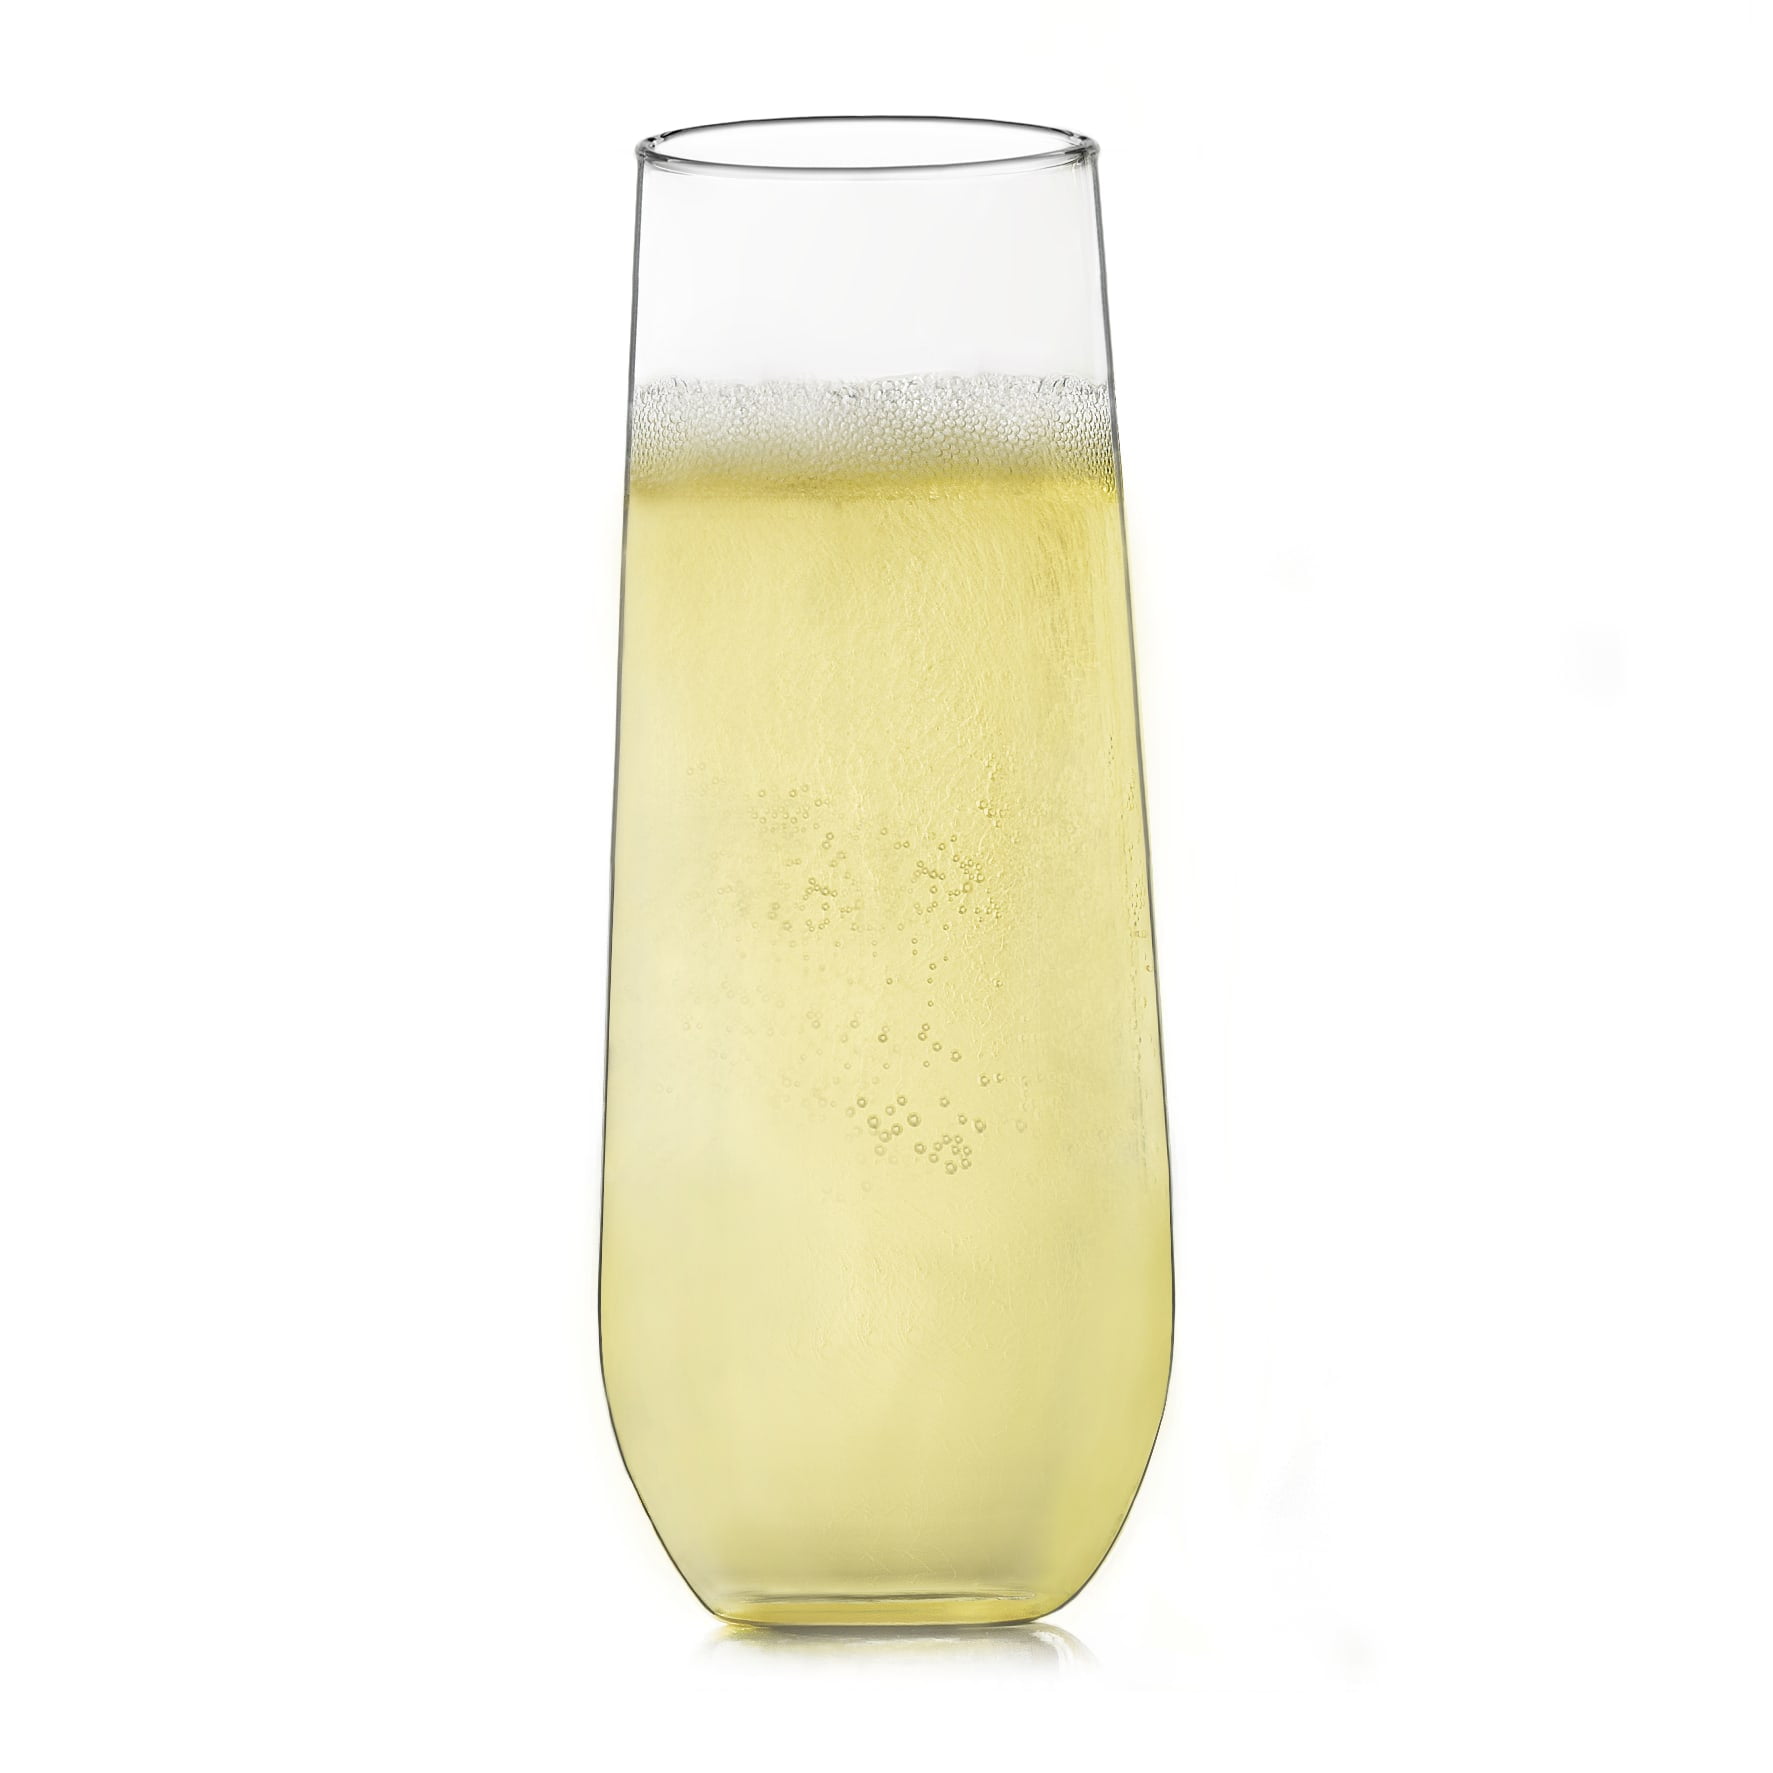 ELIXIR GLASSWARE Stemless Champagne Flutes - Crystal Glass Flutes, Hand  Blown - Set of 6 Stemless Gl…See more ELIXIR GLASSWARE Stemless Champagne